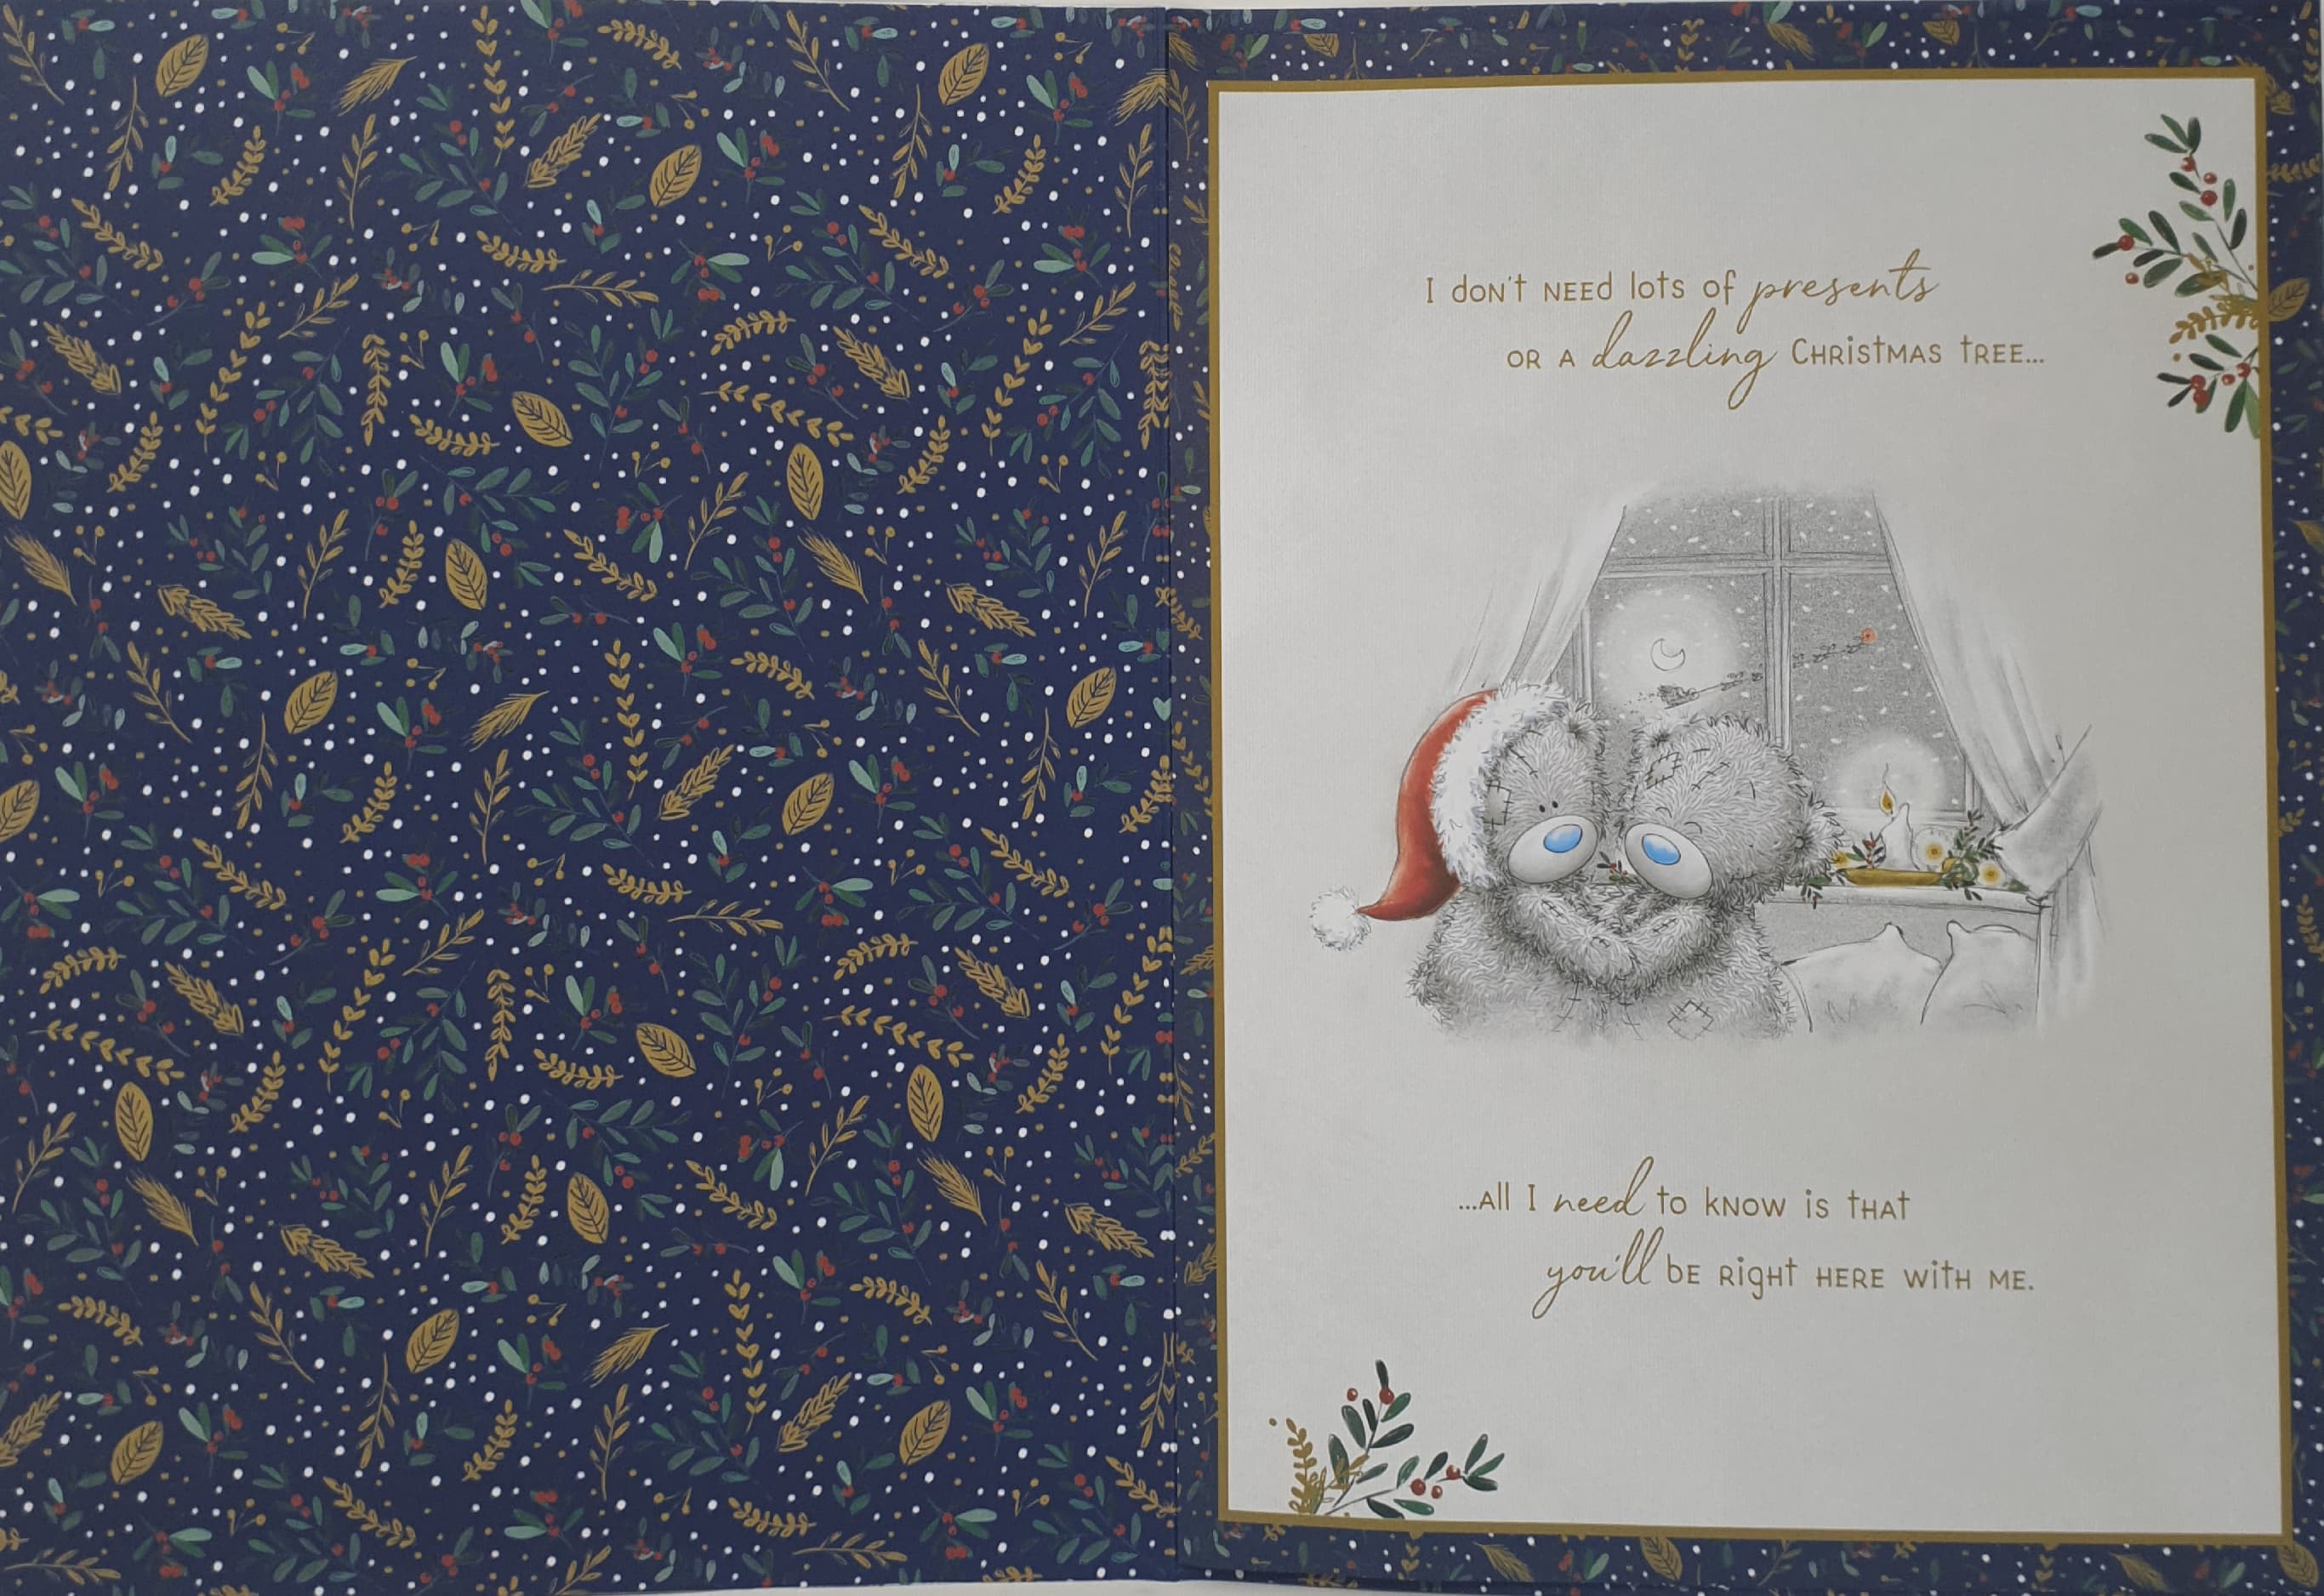 Fiancé Christmas Card / Teddy Bears Holding Hands Looking Through Window (Card In A Presentation Box)